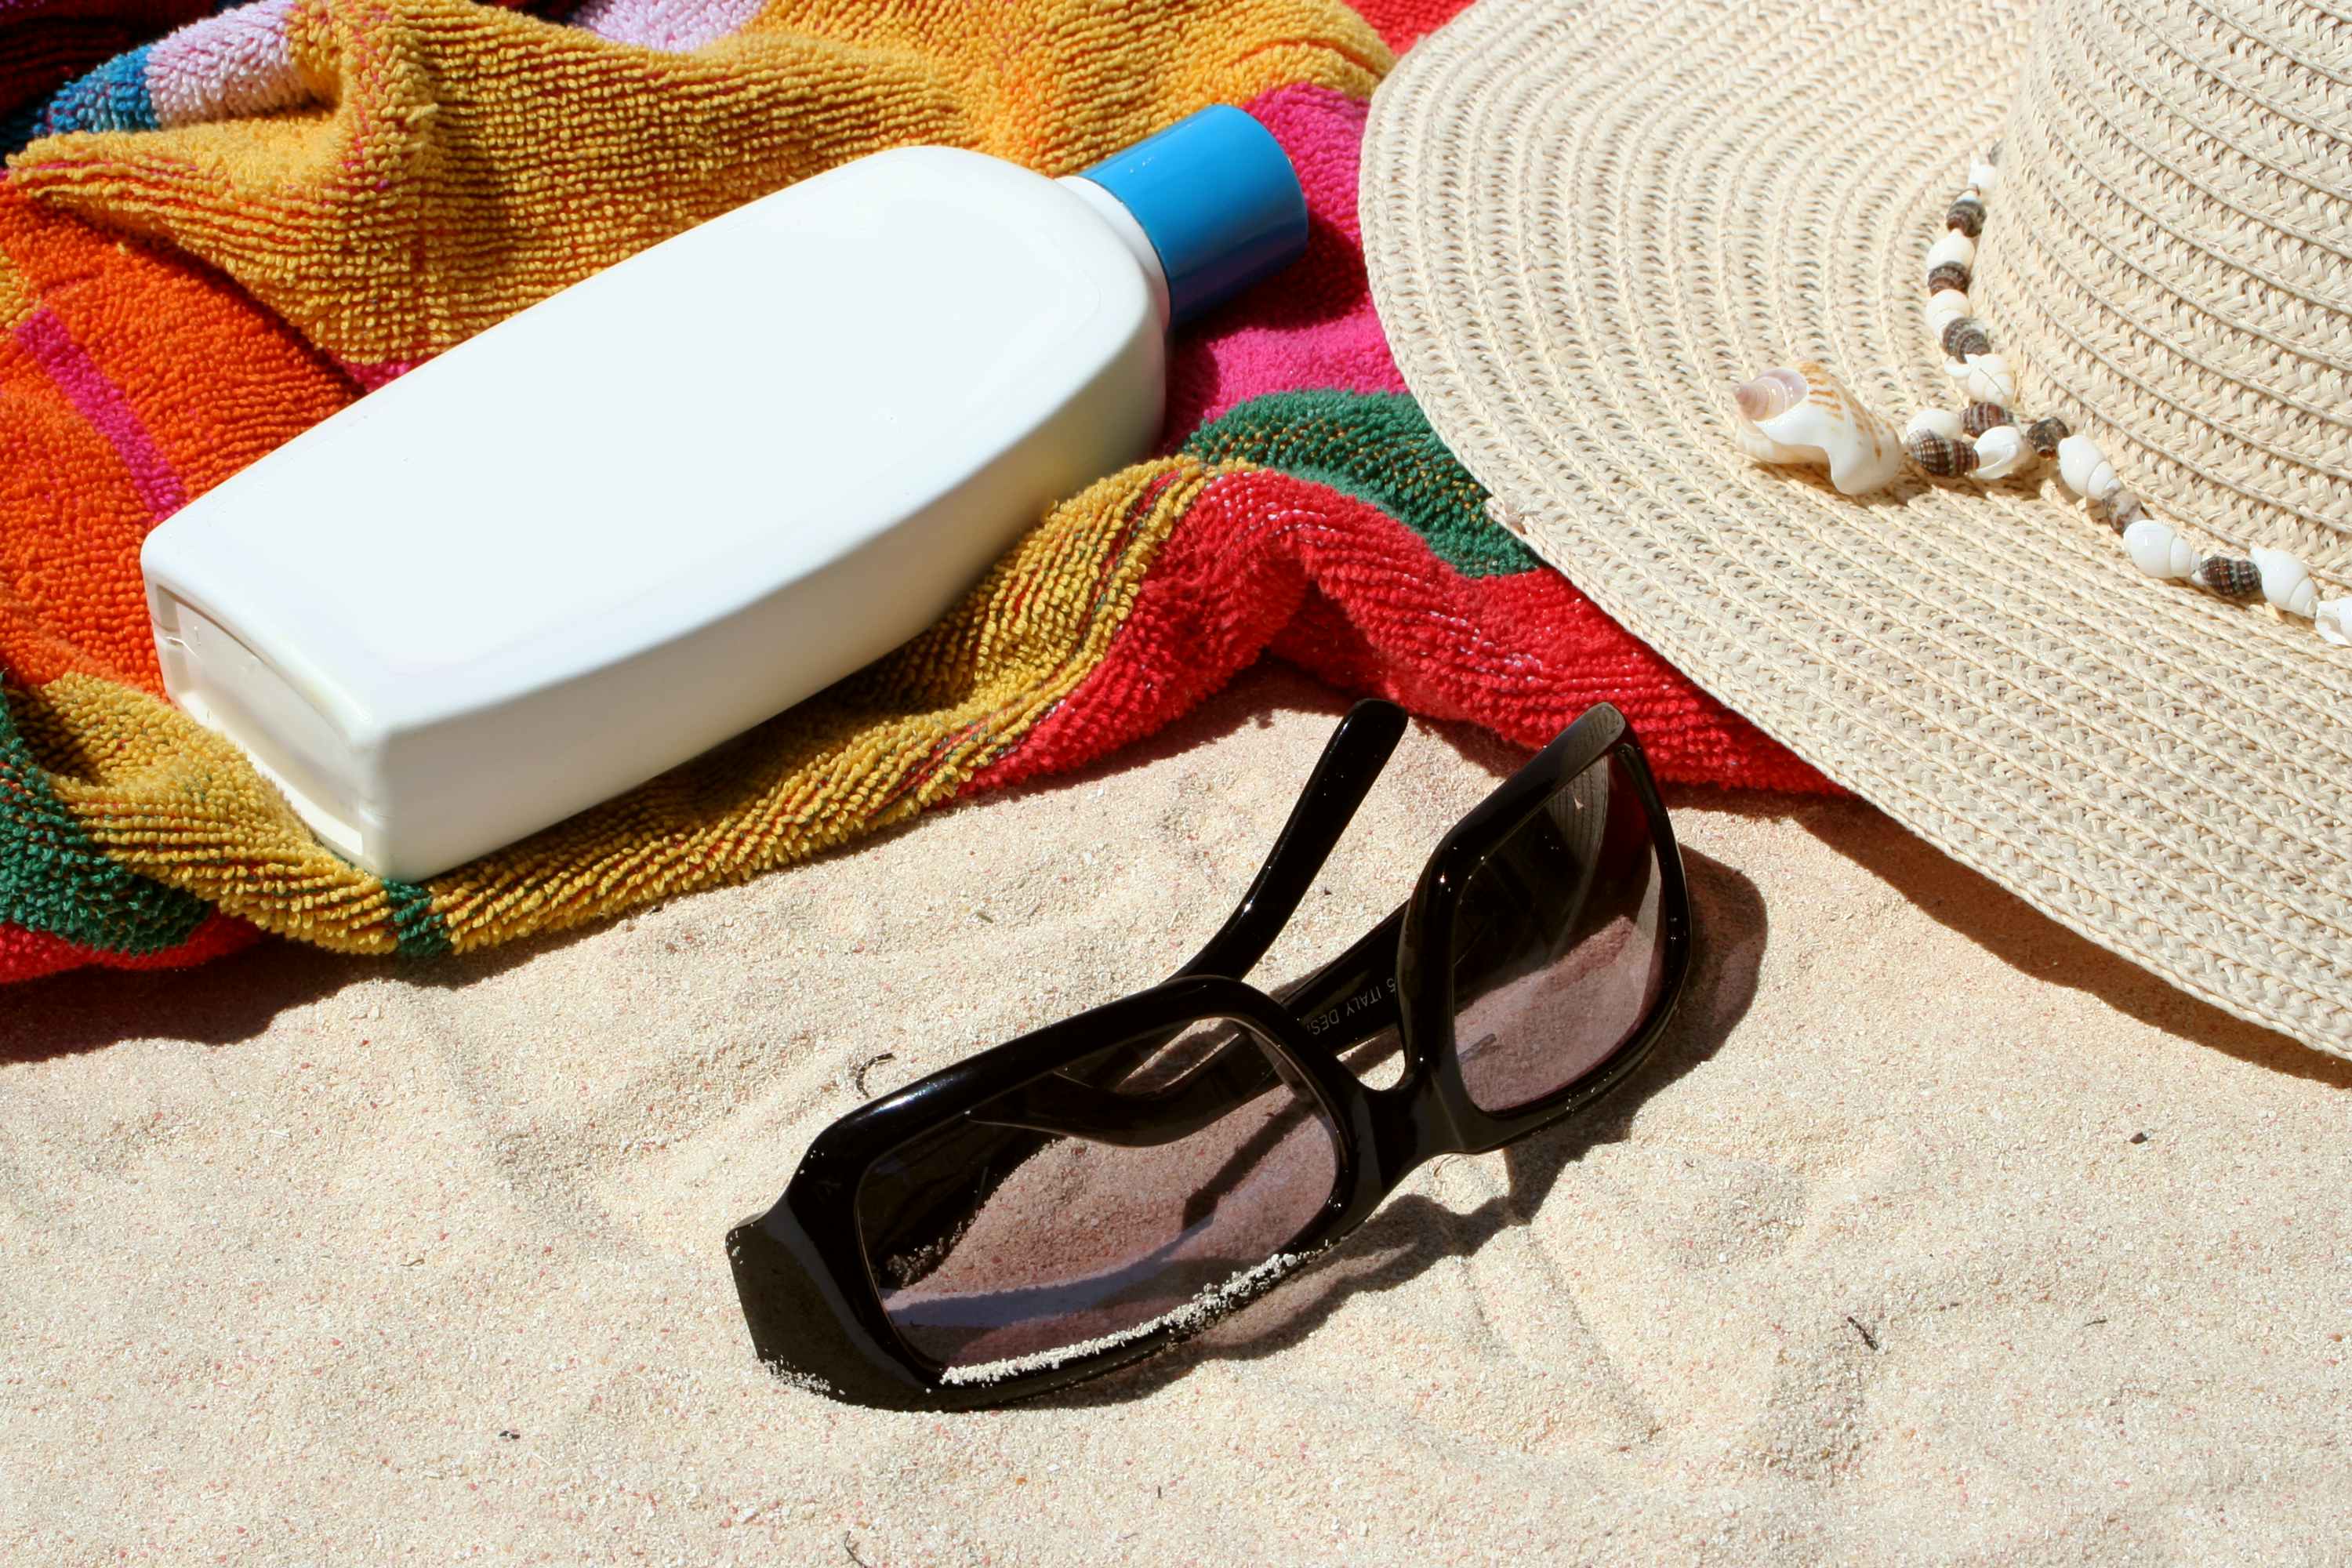 Sun block and sunglasses on a beach towel